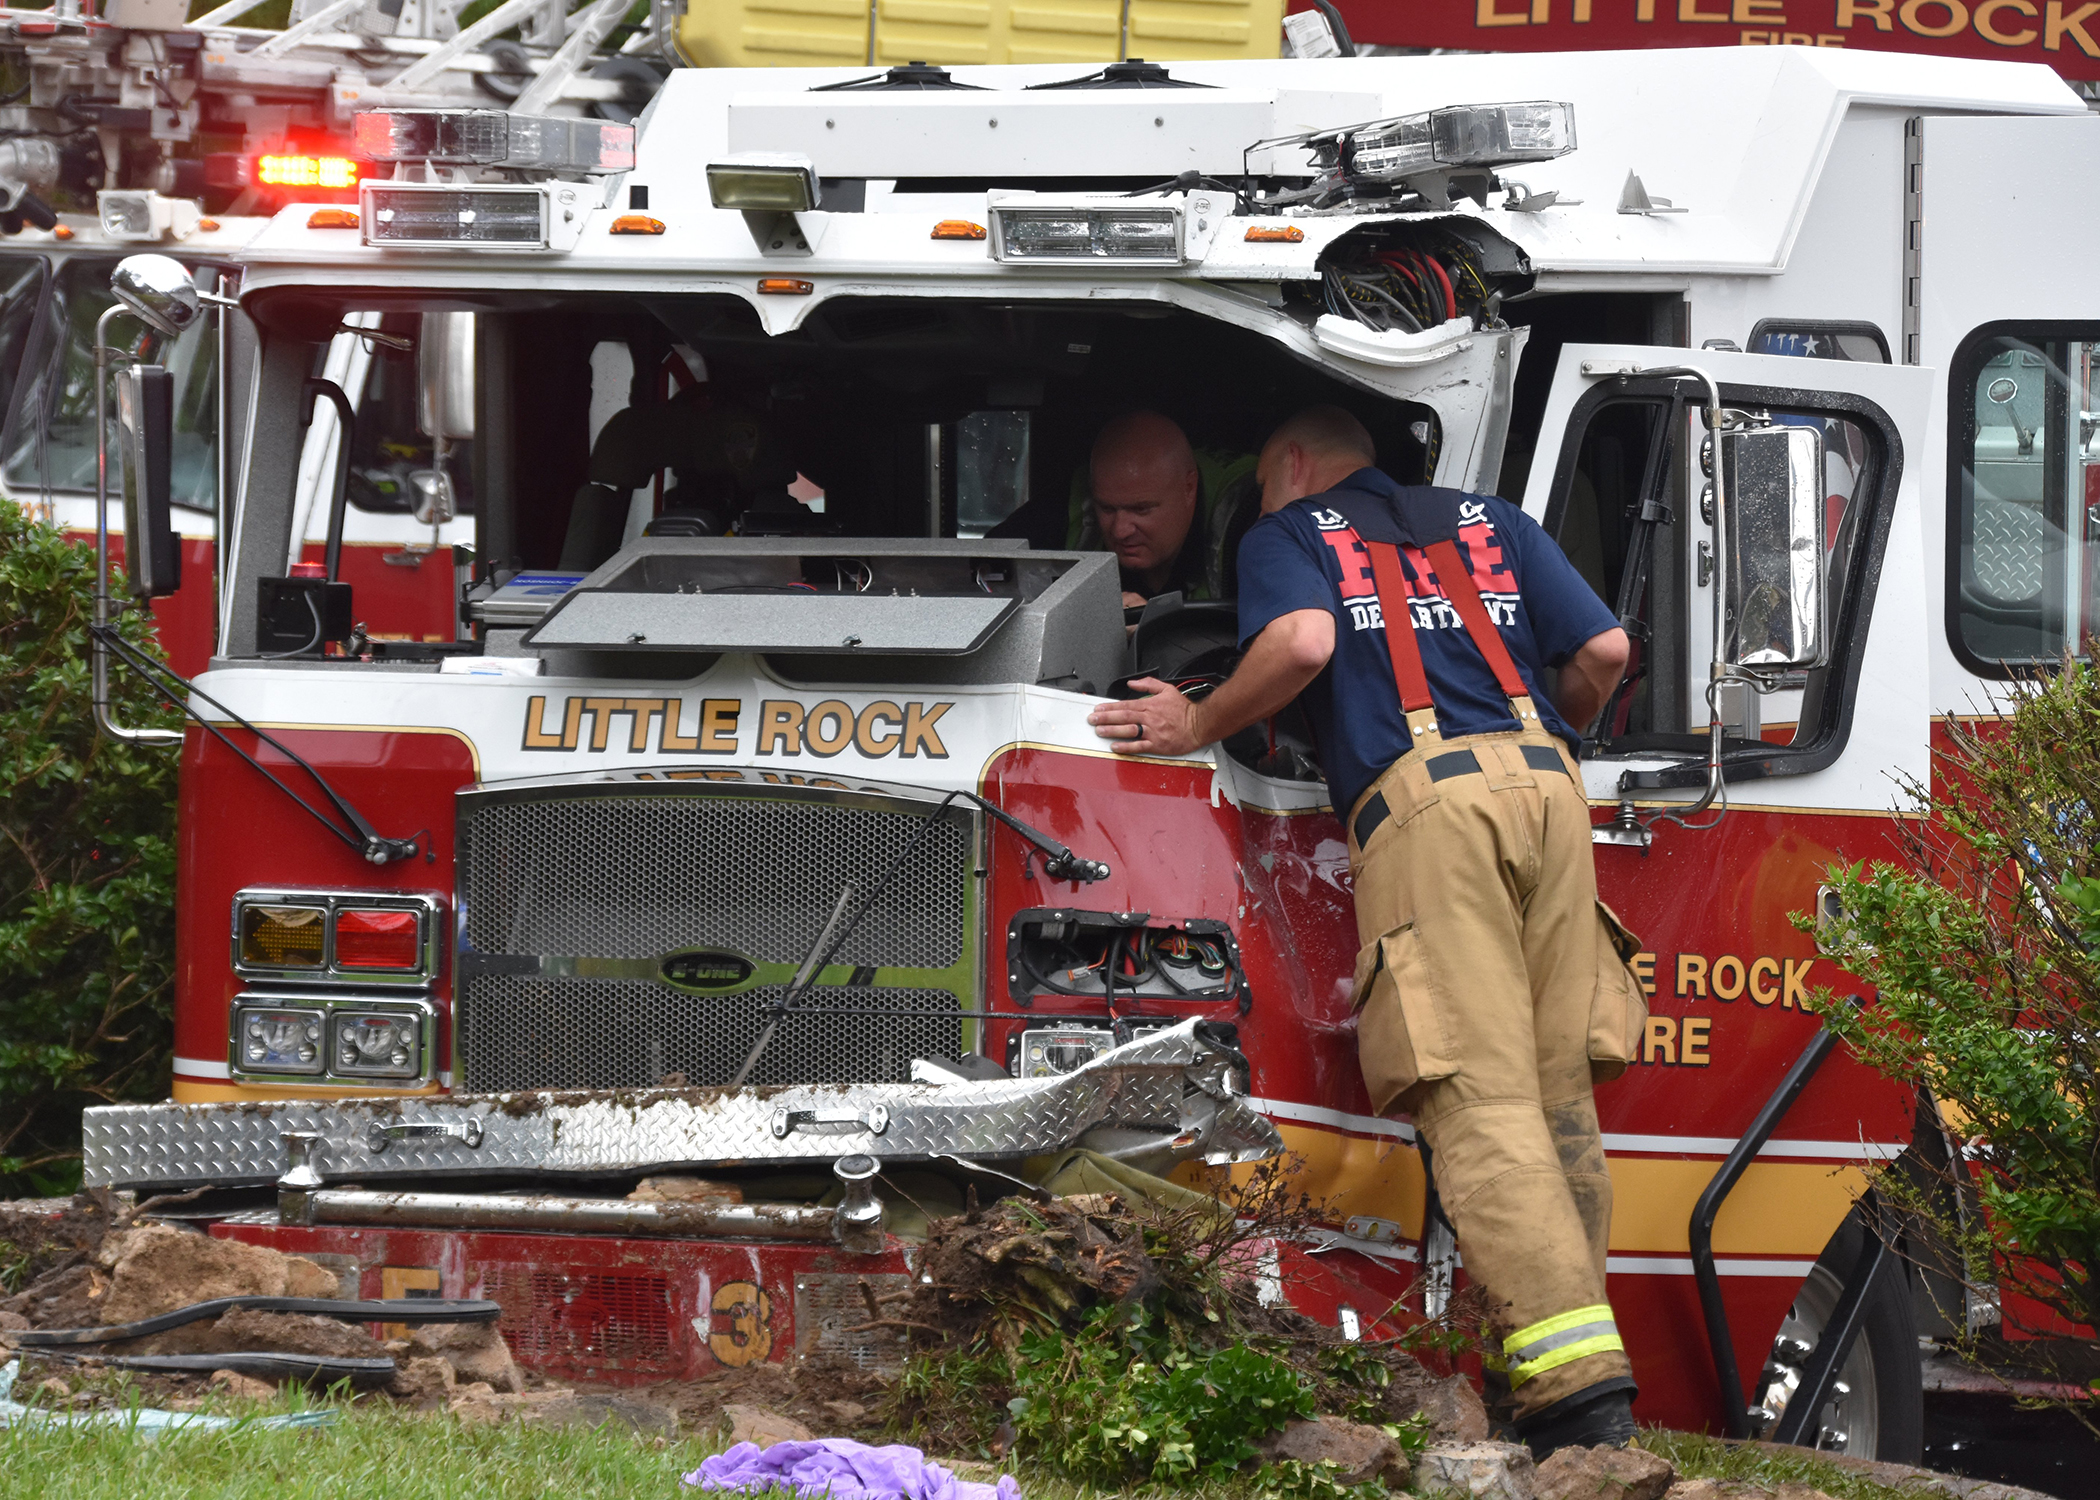 2 Firetrucks Crash Near Ualr 6 Firefighters Hurt